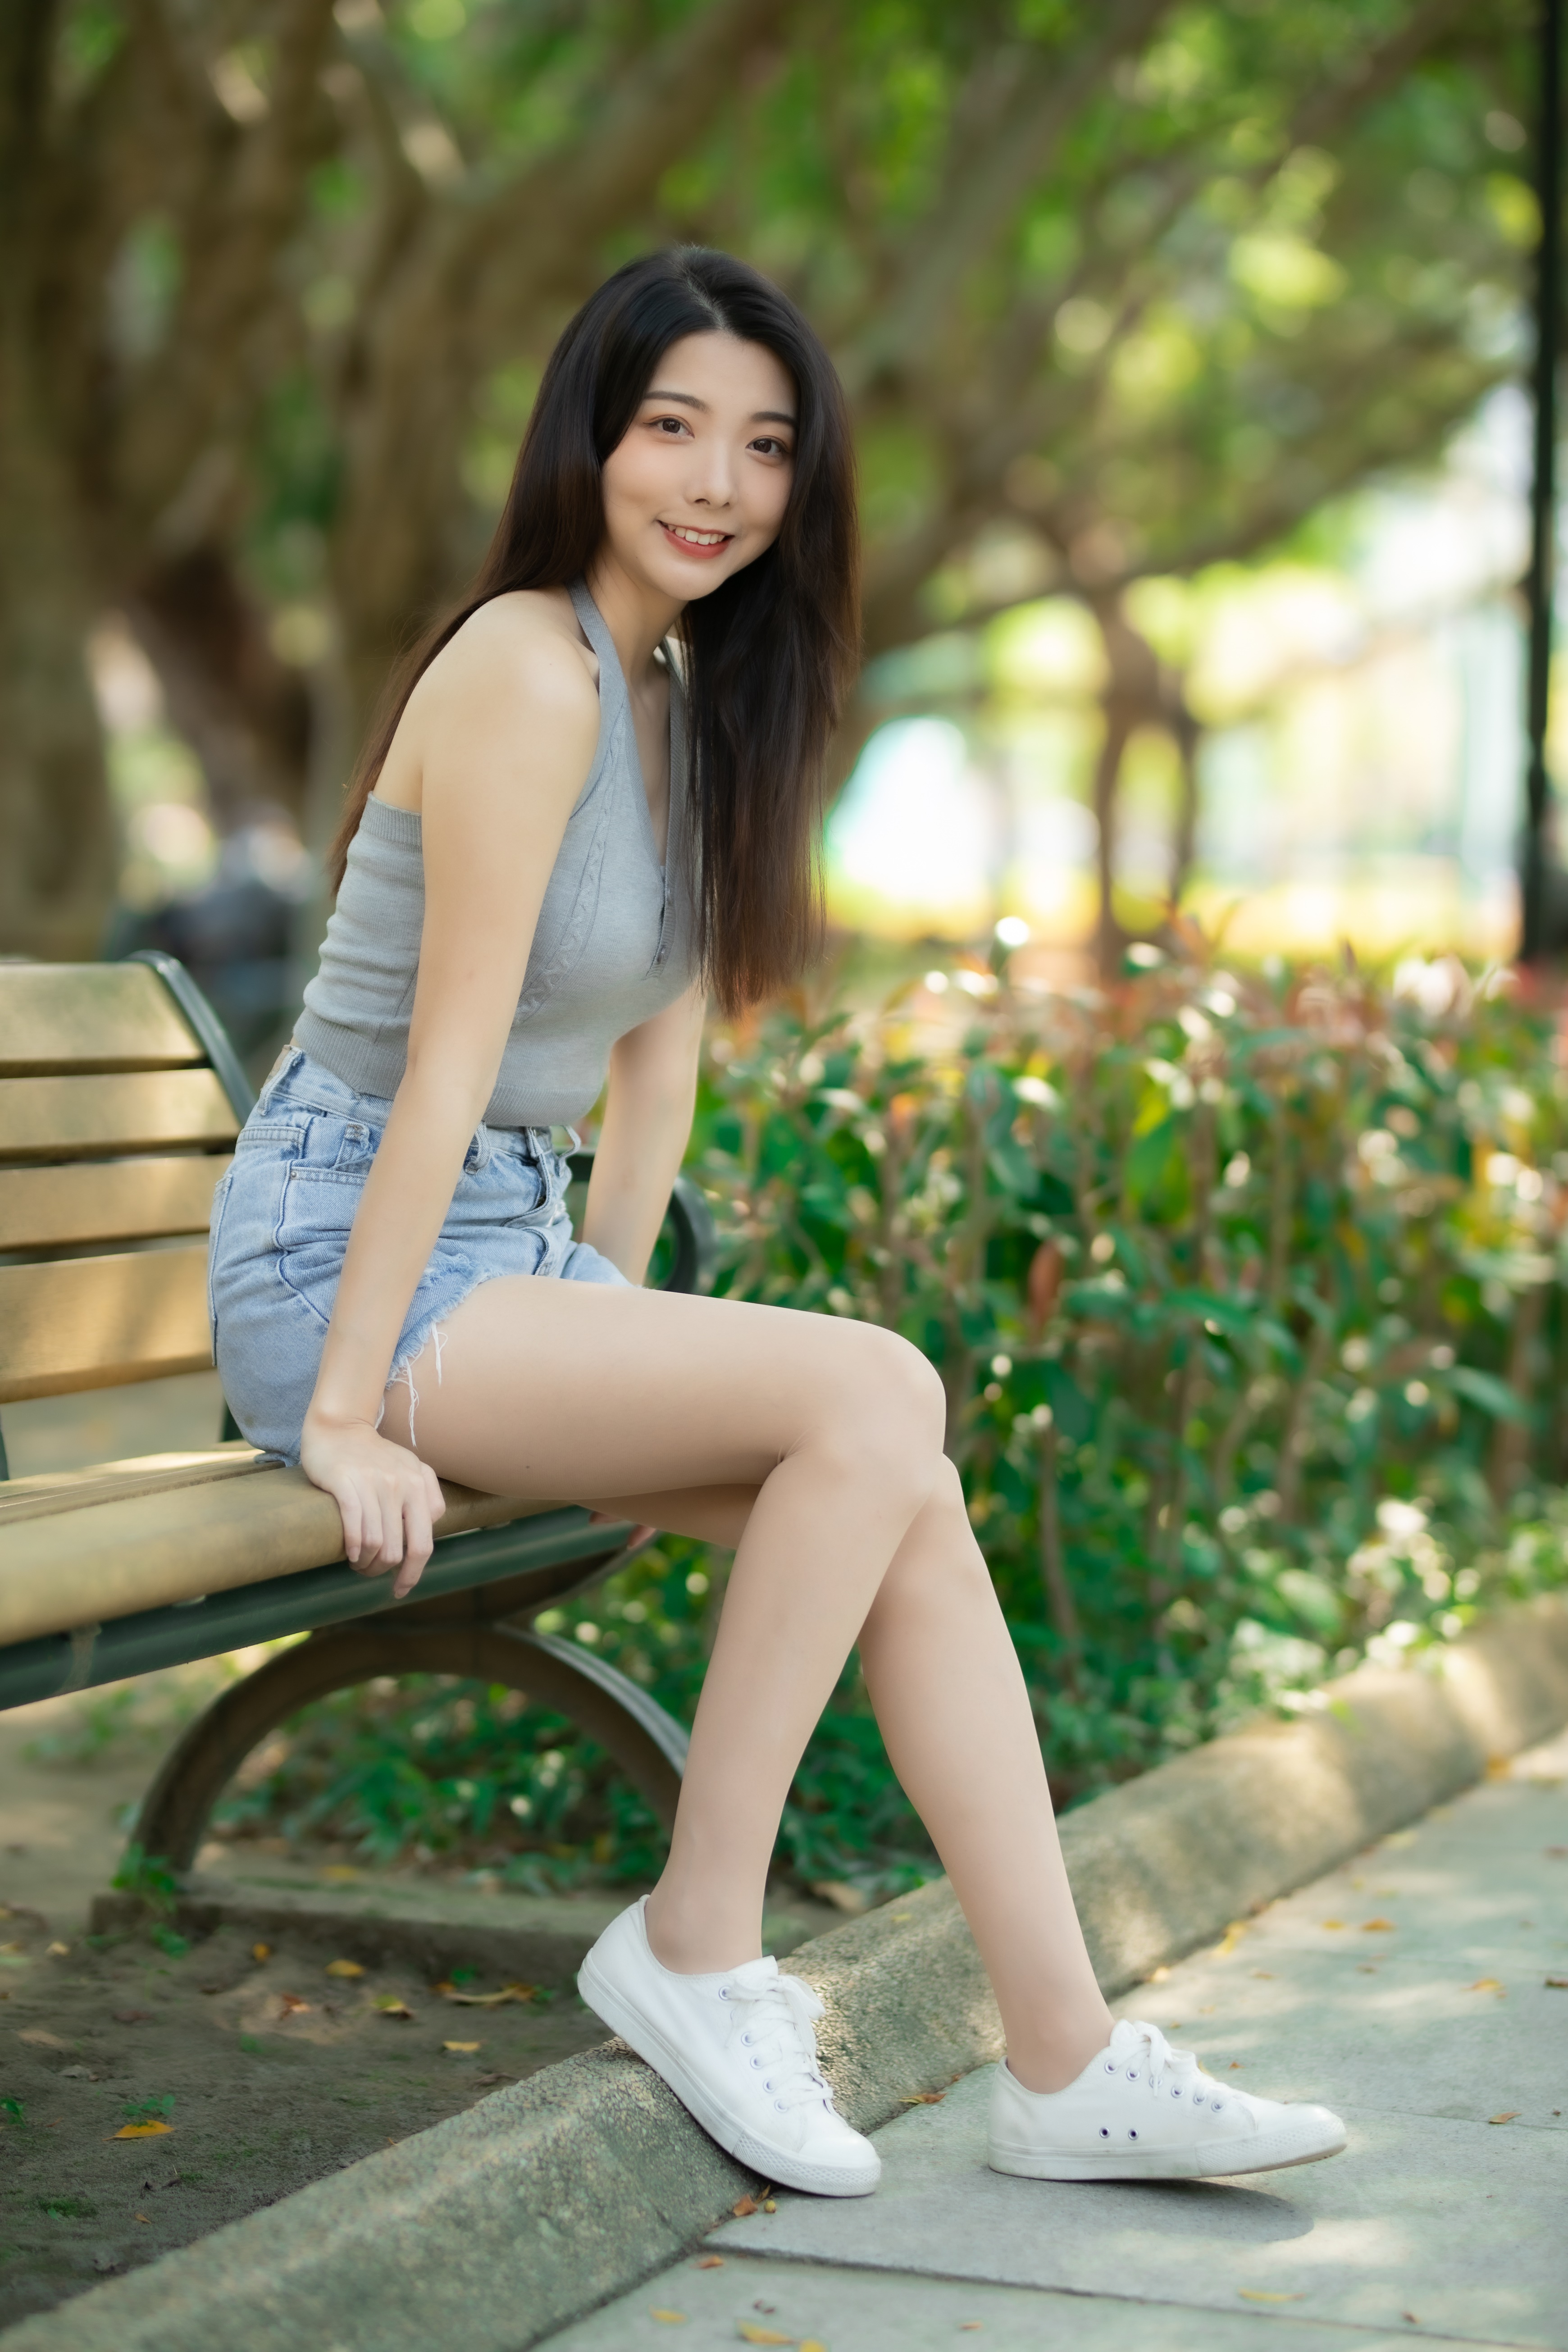 Asian Model Women Long Hair Dark Hair Sitting Bench Grey Shirt Sneakers Bushes Depth Of Field Jean S 3480x5220